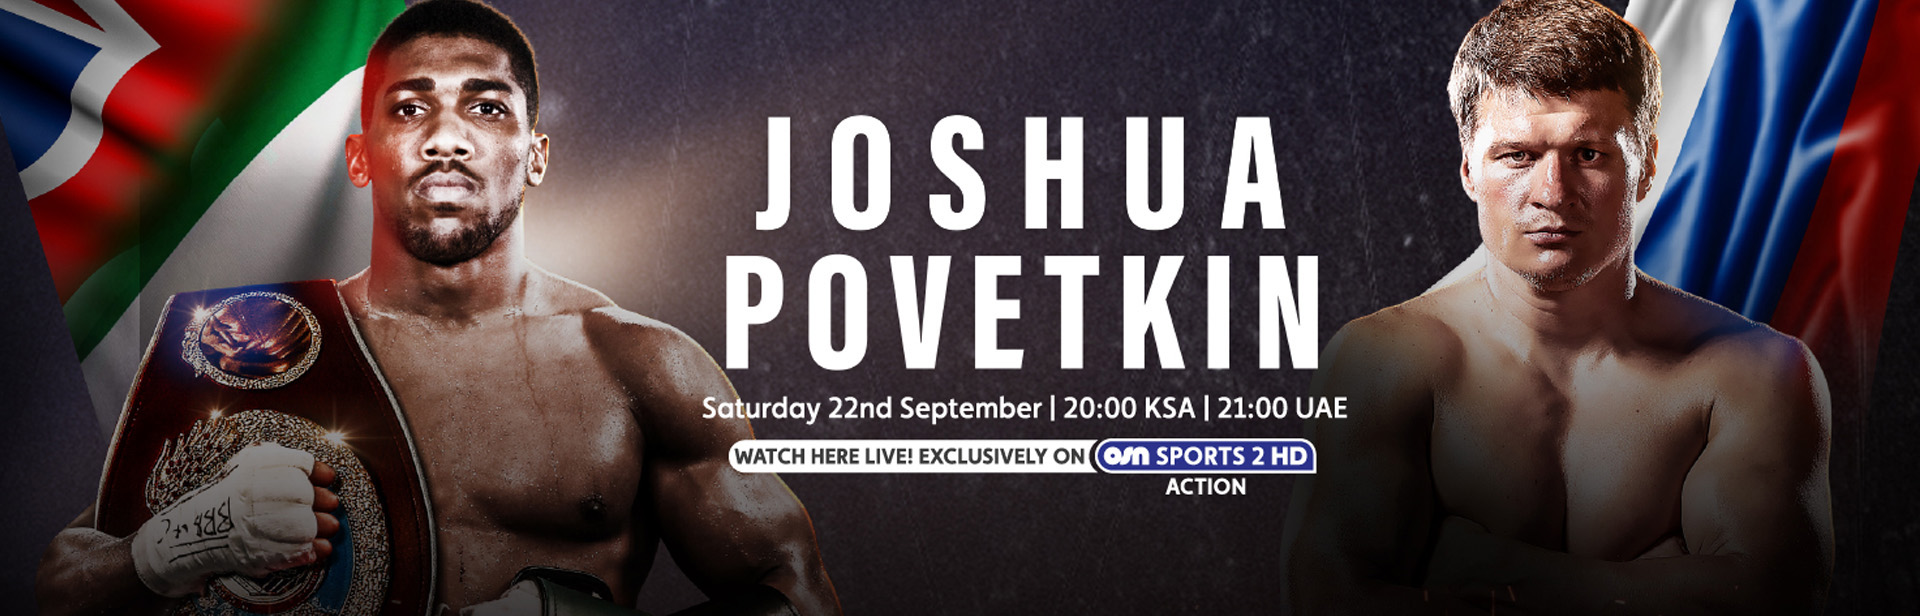 Joshua vs Povetkin: World heavyweight title fight on OSN